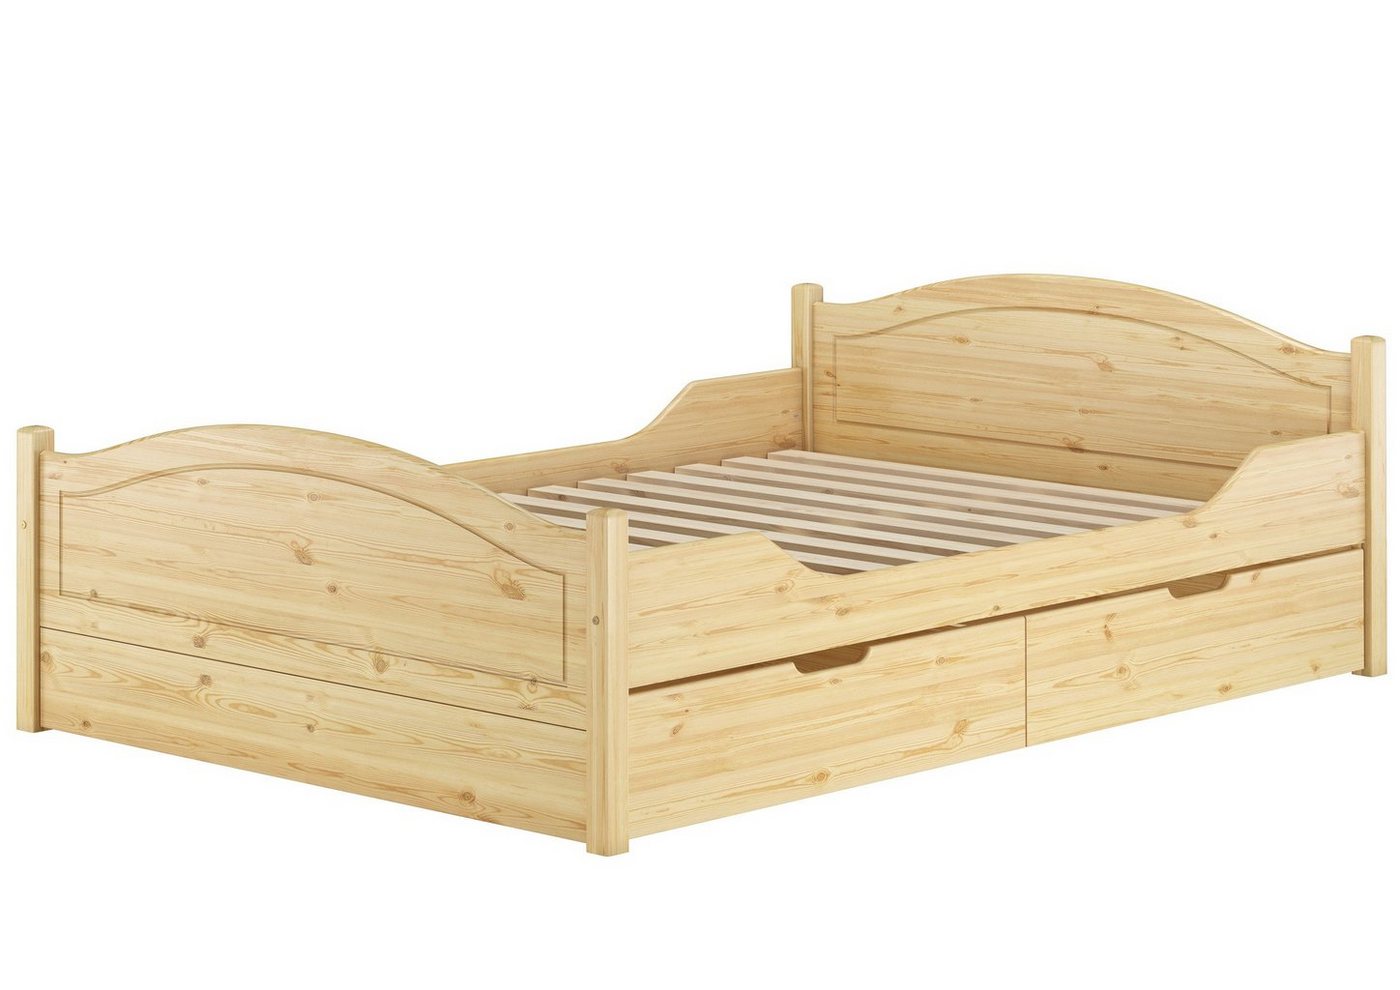 ERST-HOLZ Bett Doppelbett 140x200 Komplettset Bett mit Staukasten, Kieferfarblos lackiert von ERST-HOLZ